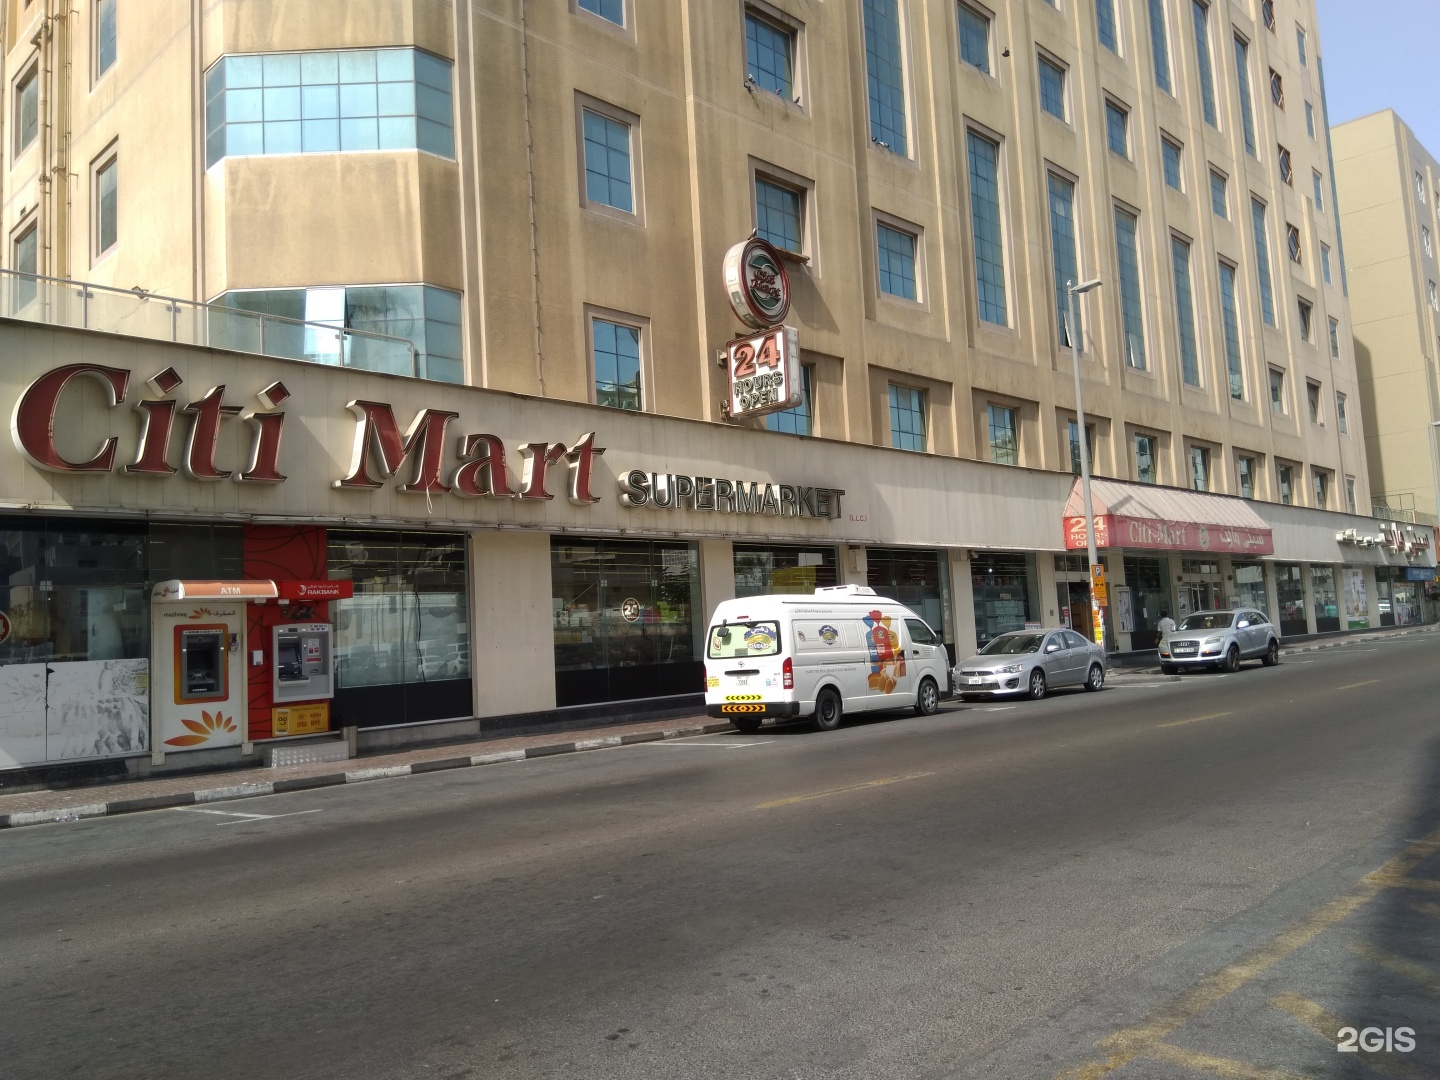 Citimart Supermarket Danat Al Rolla 23 17b Street Dubai 2gis